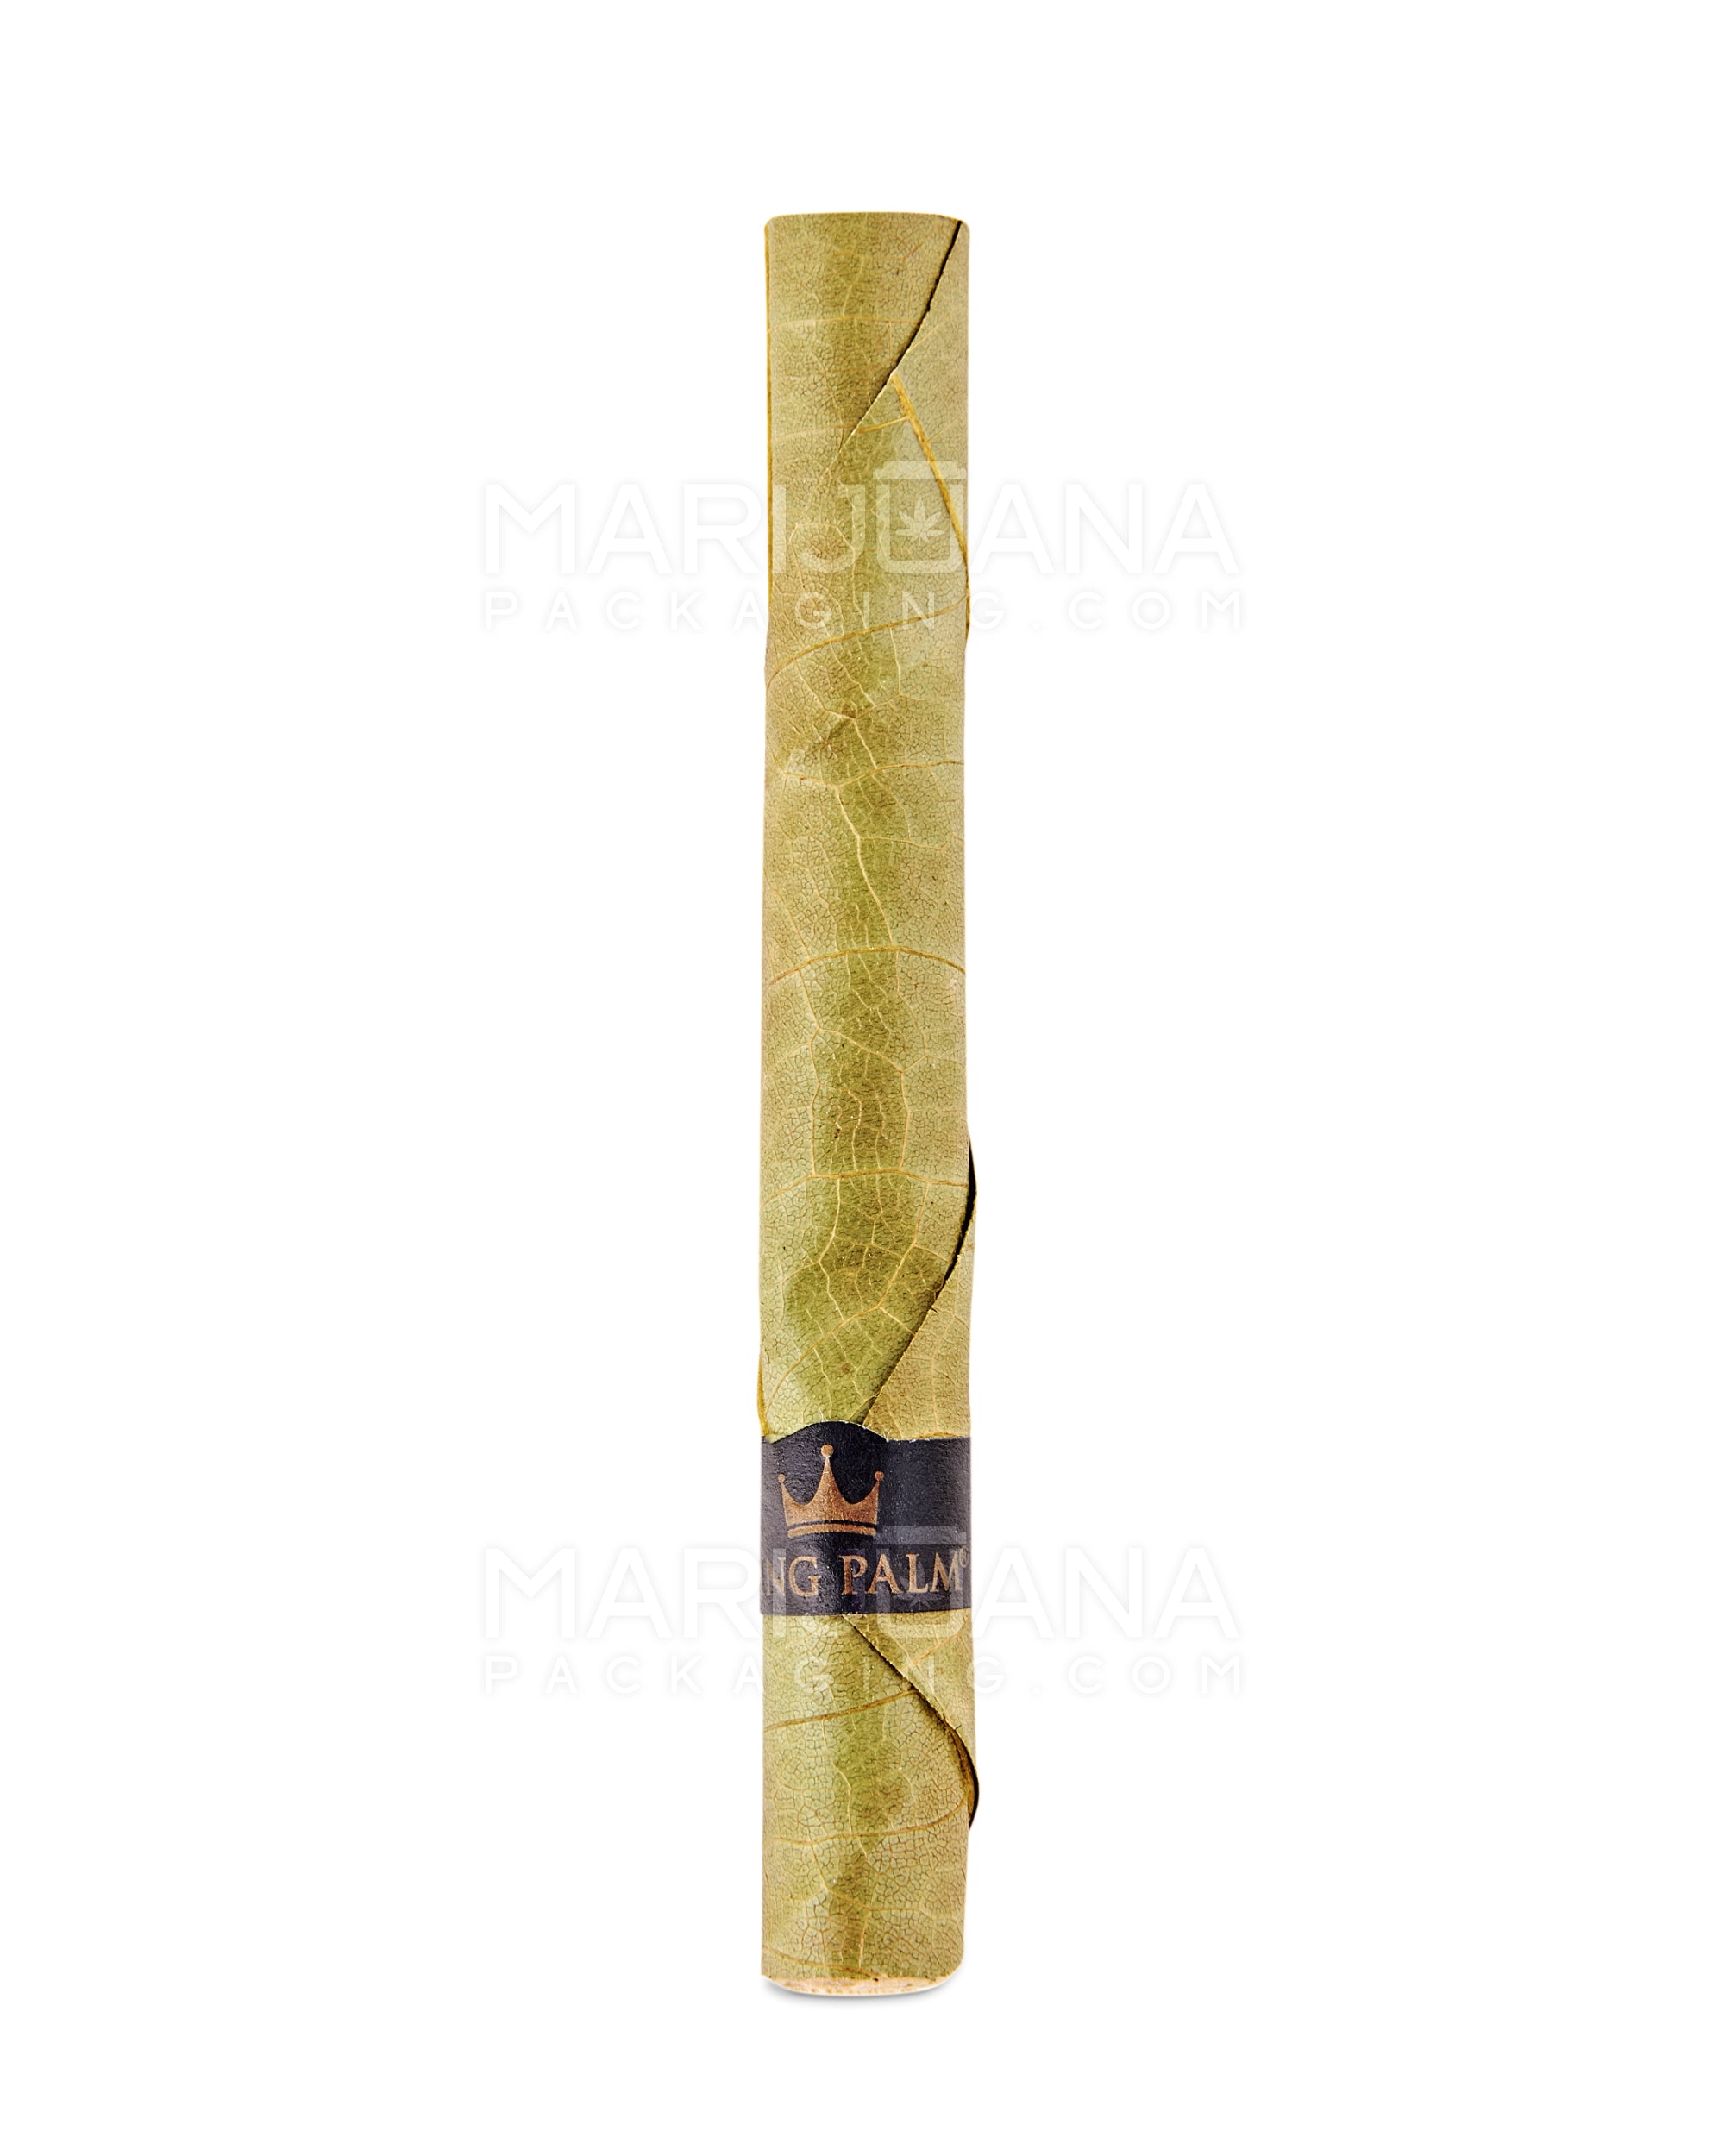 KING PALM | 'Retail Display' Mini Green Natural Leaf Blunt Wraps | 84mm - Original Flavor - 20 Count